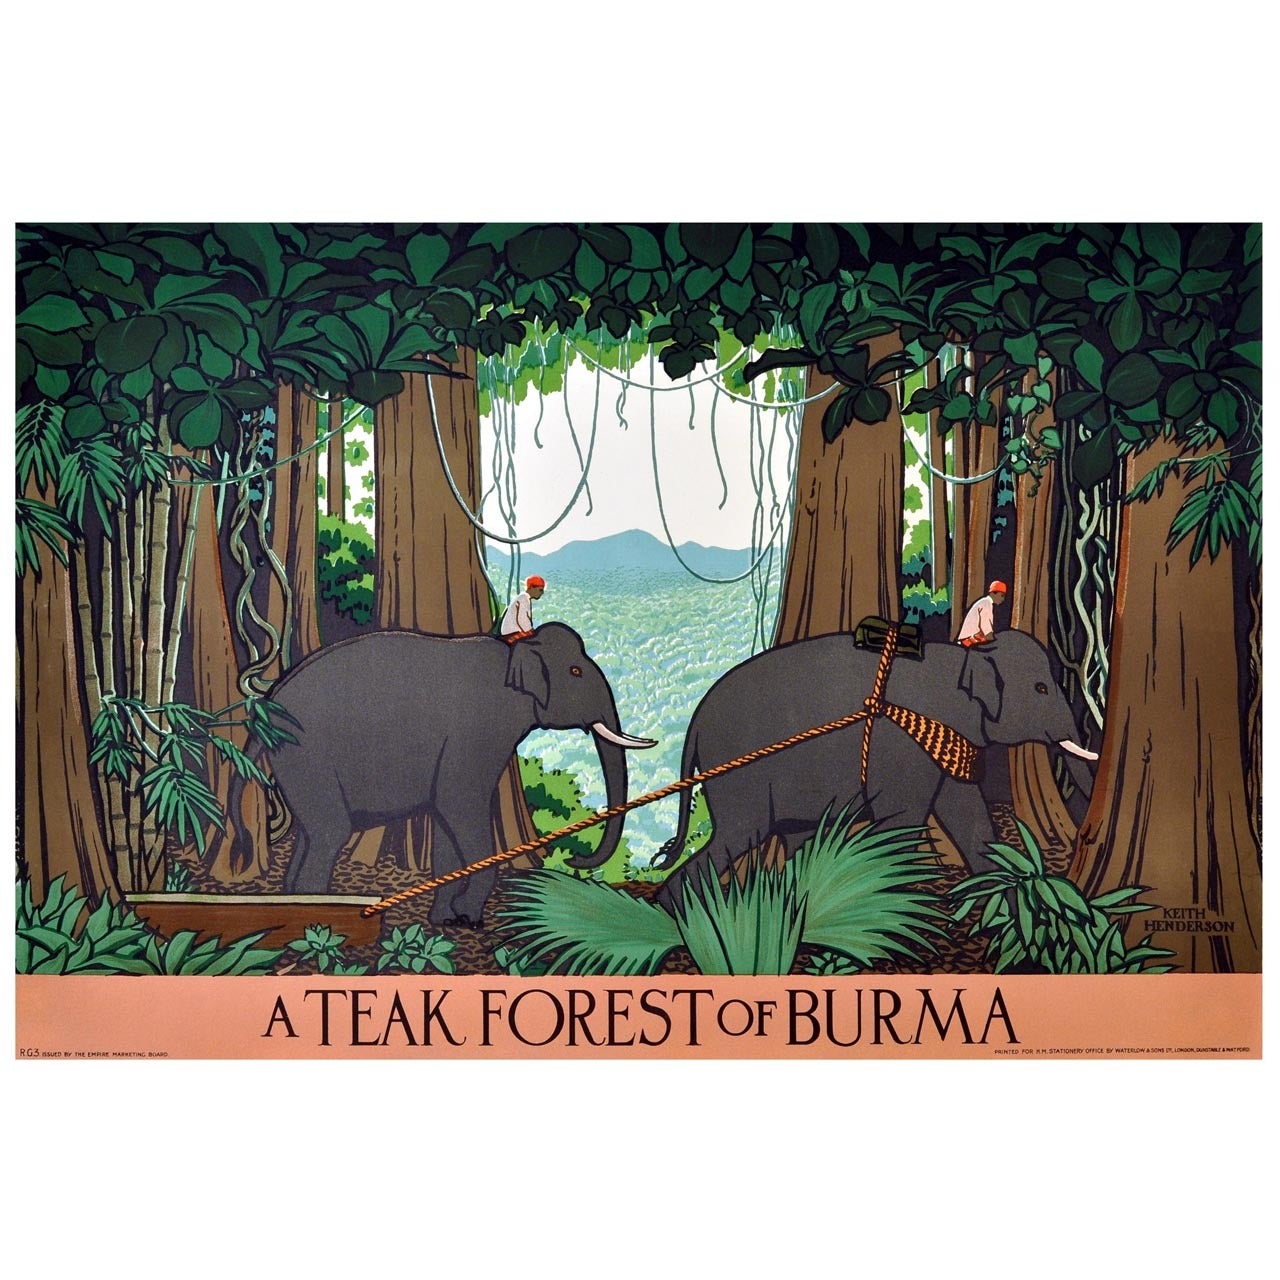 Original 1930s Empire Marketing Board Poster: "A Teak Forest of Burma" (Myanmar)